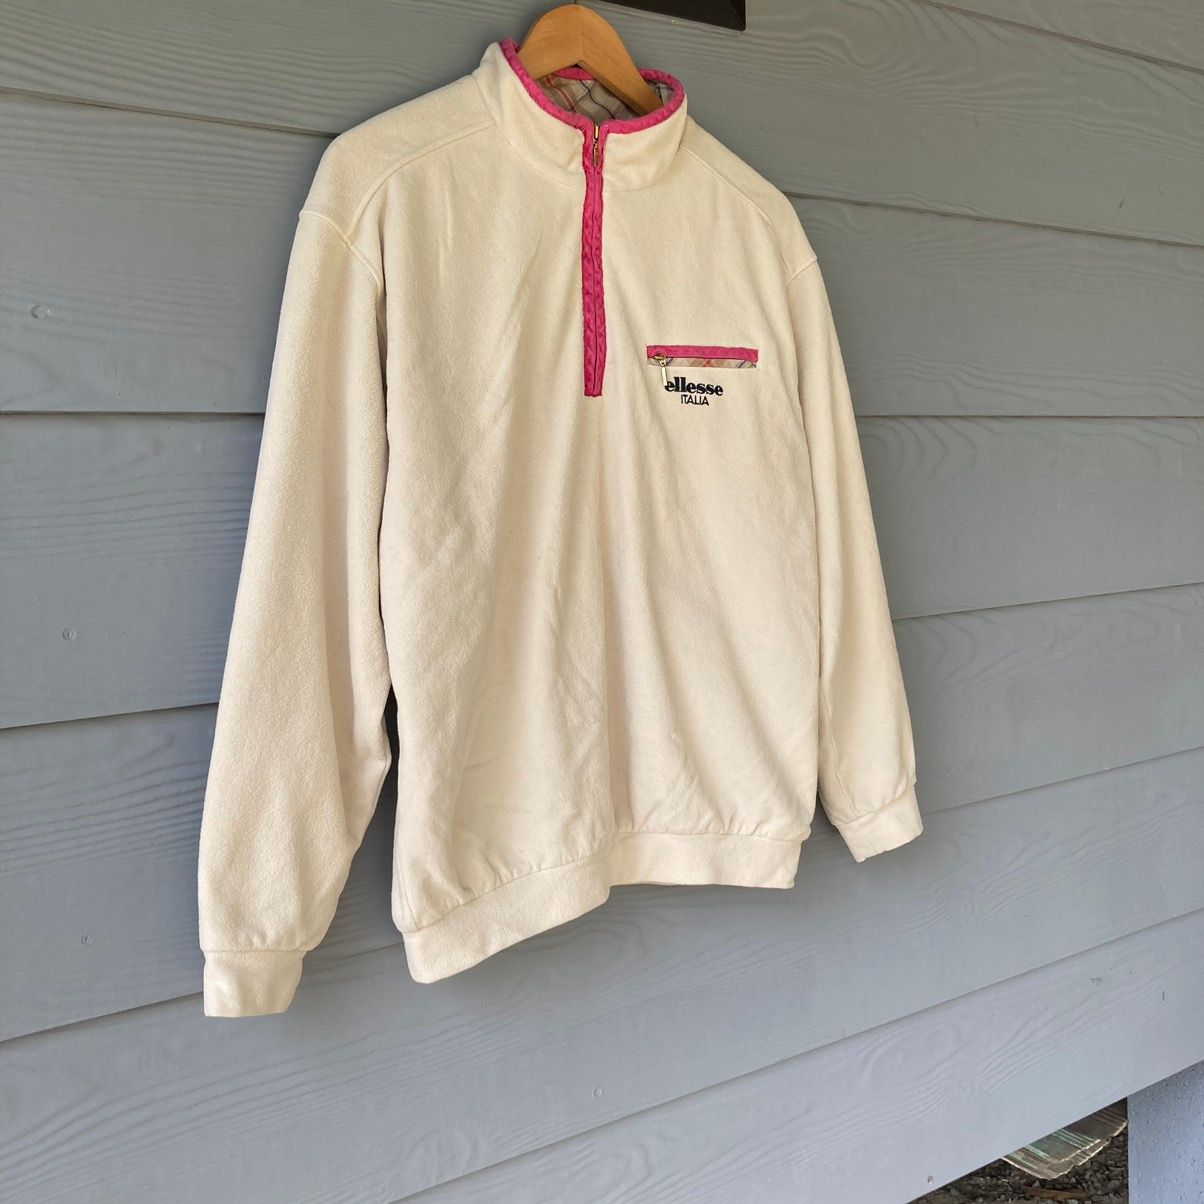 Vintage - 90s Ellese Quater Zipper Sweatshirt - 2